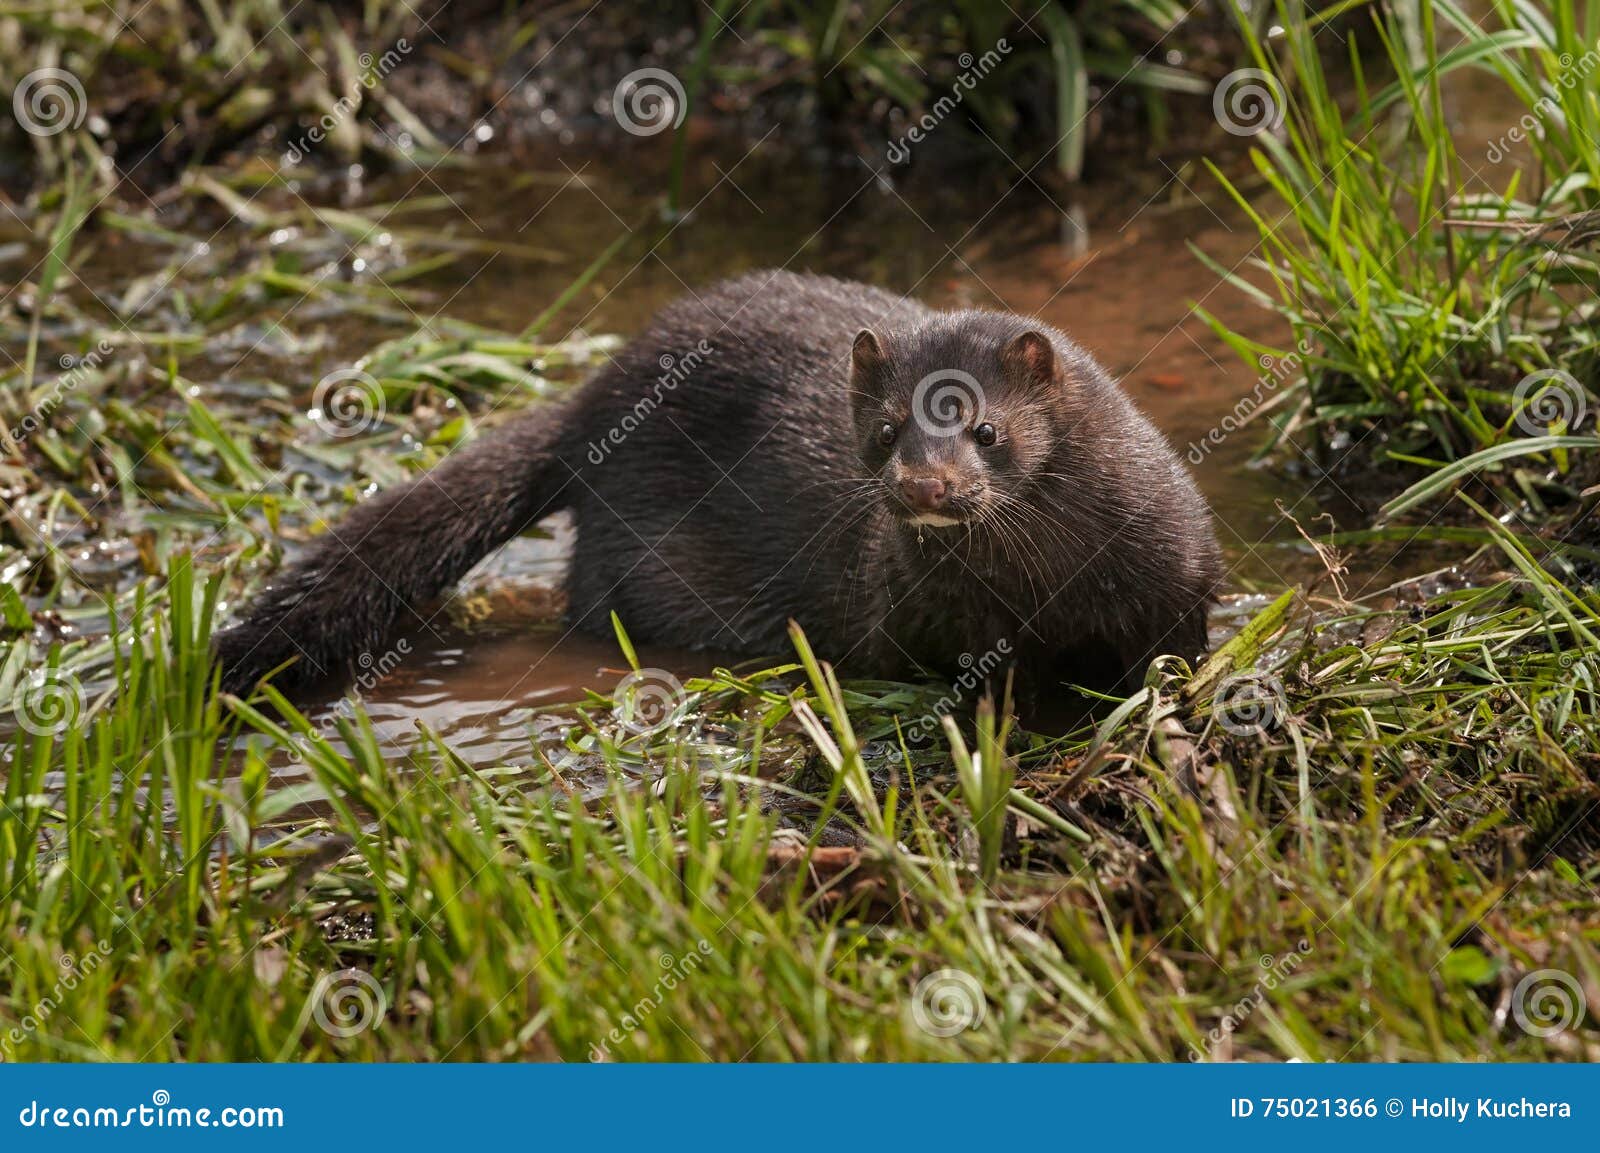 adult american mink (neovison vison) in marshy area